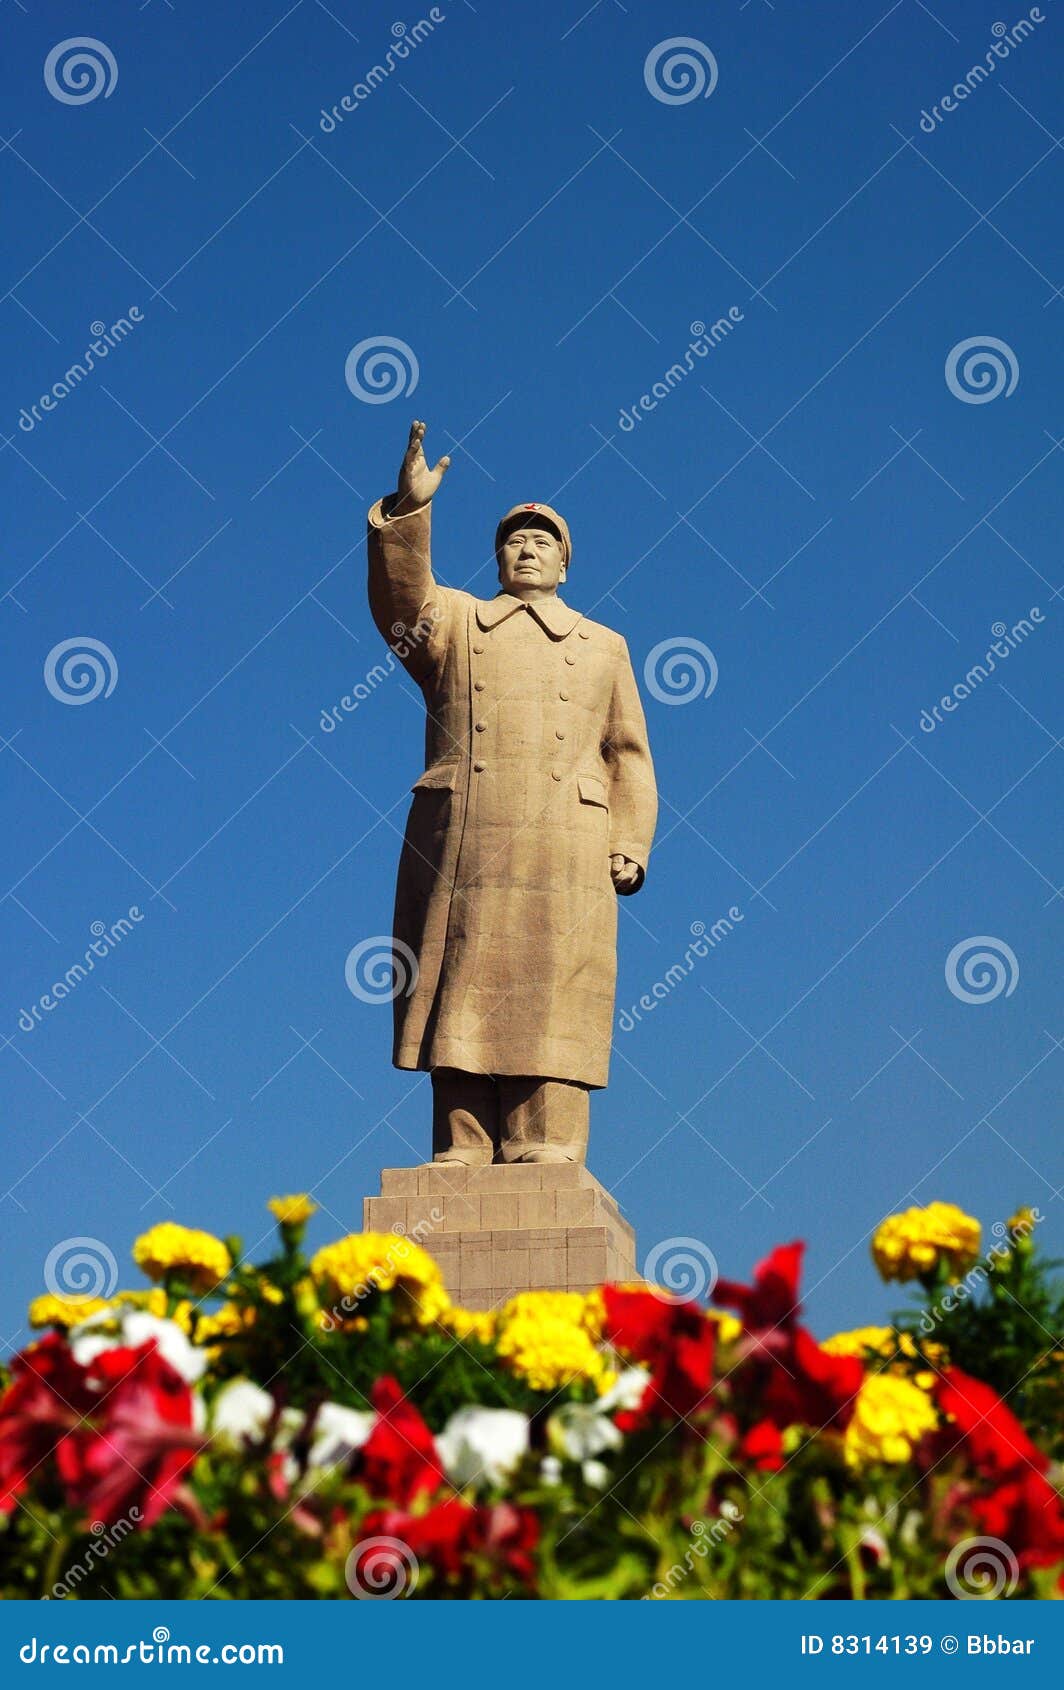 chairman mao's statue